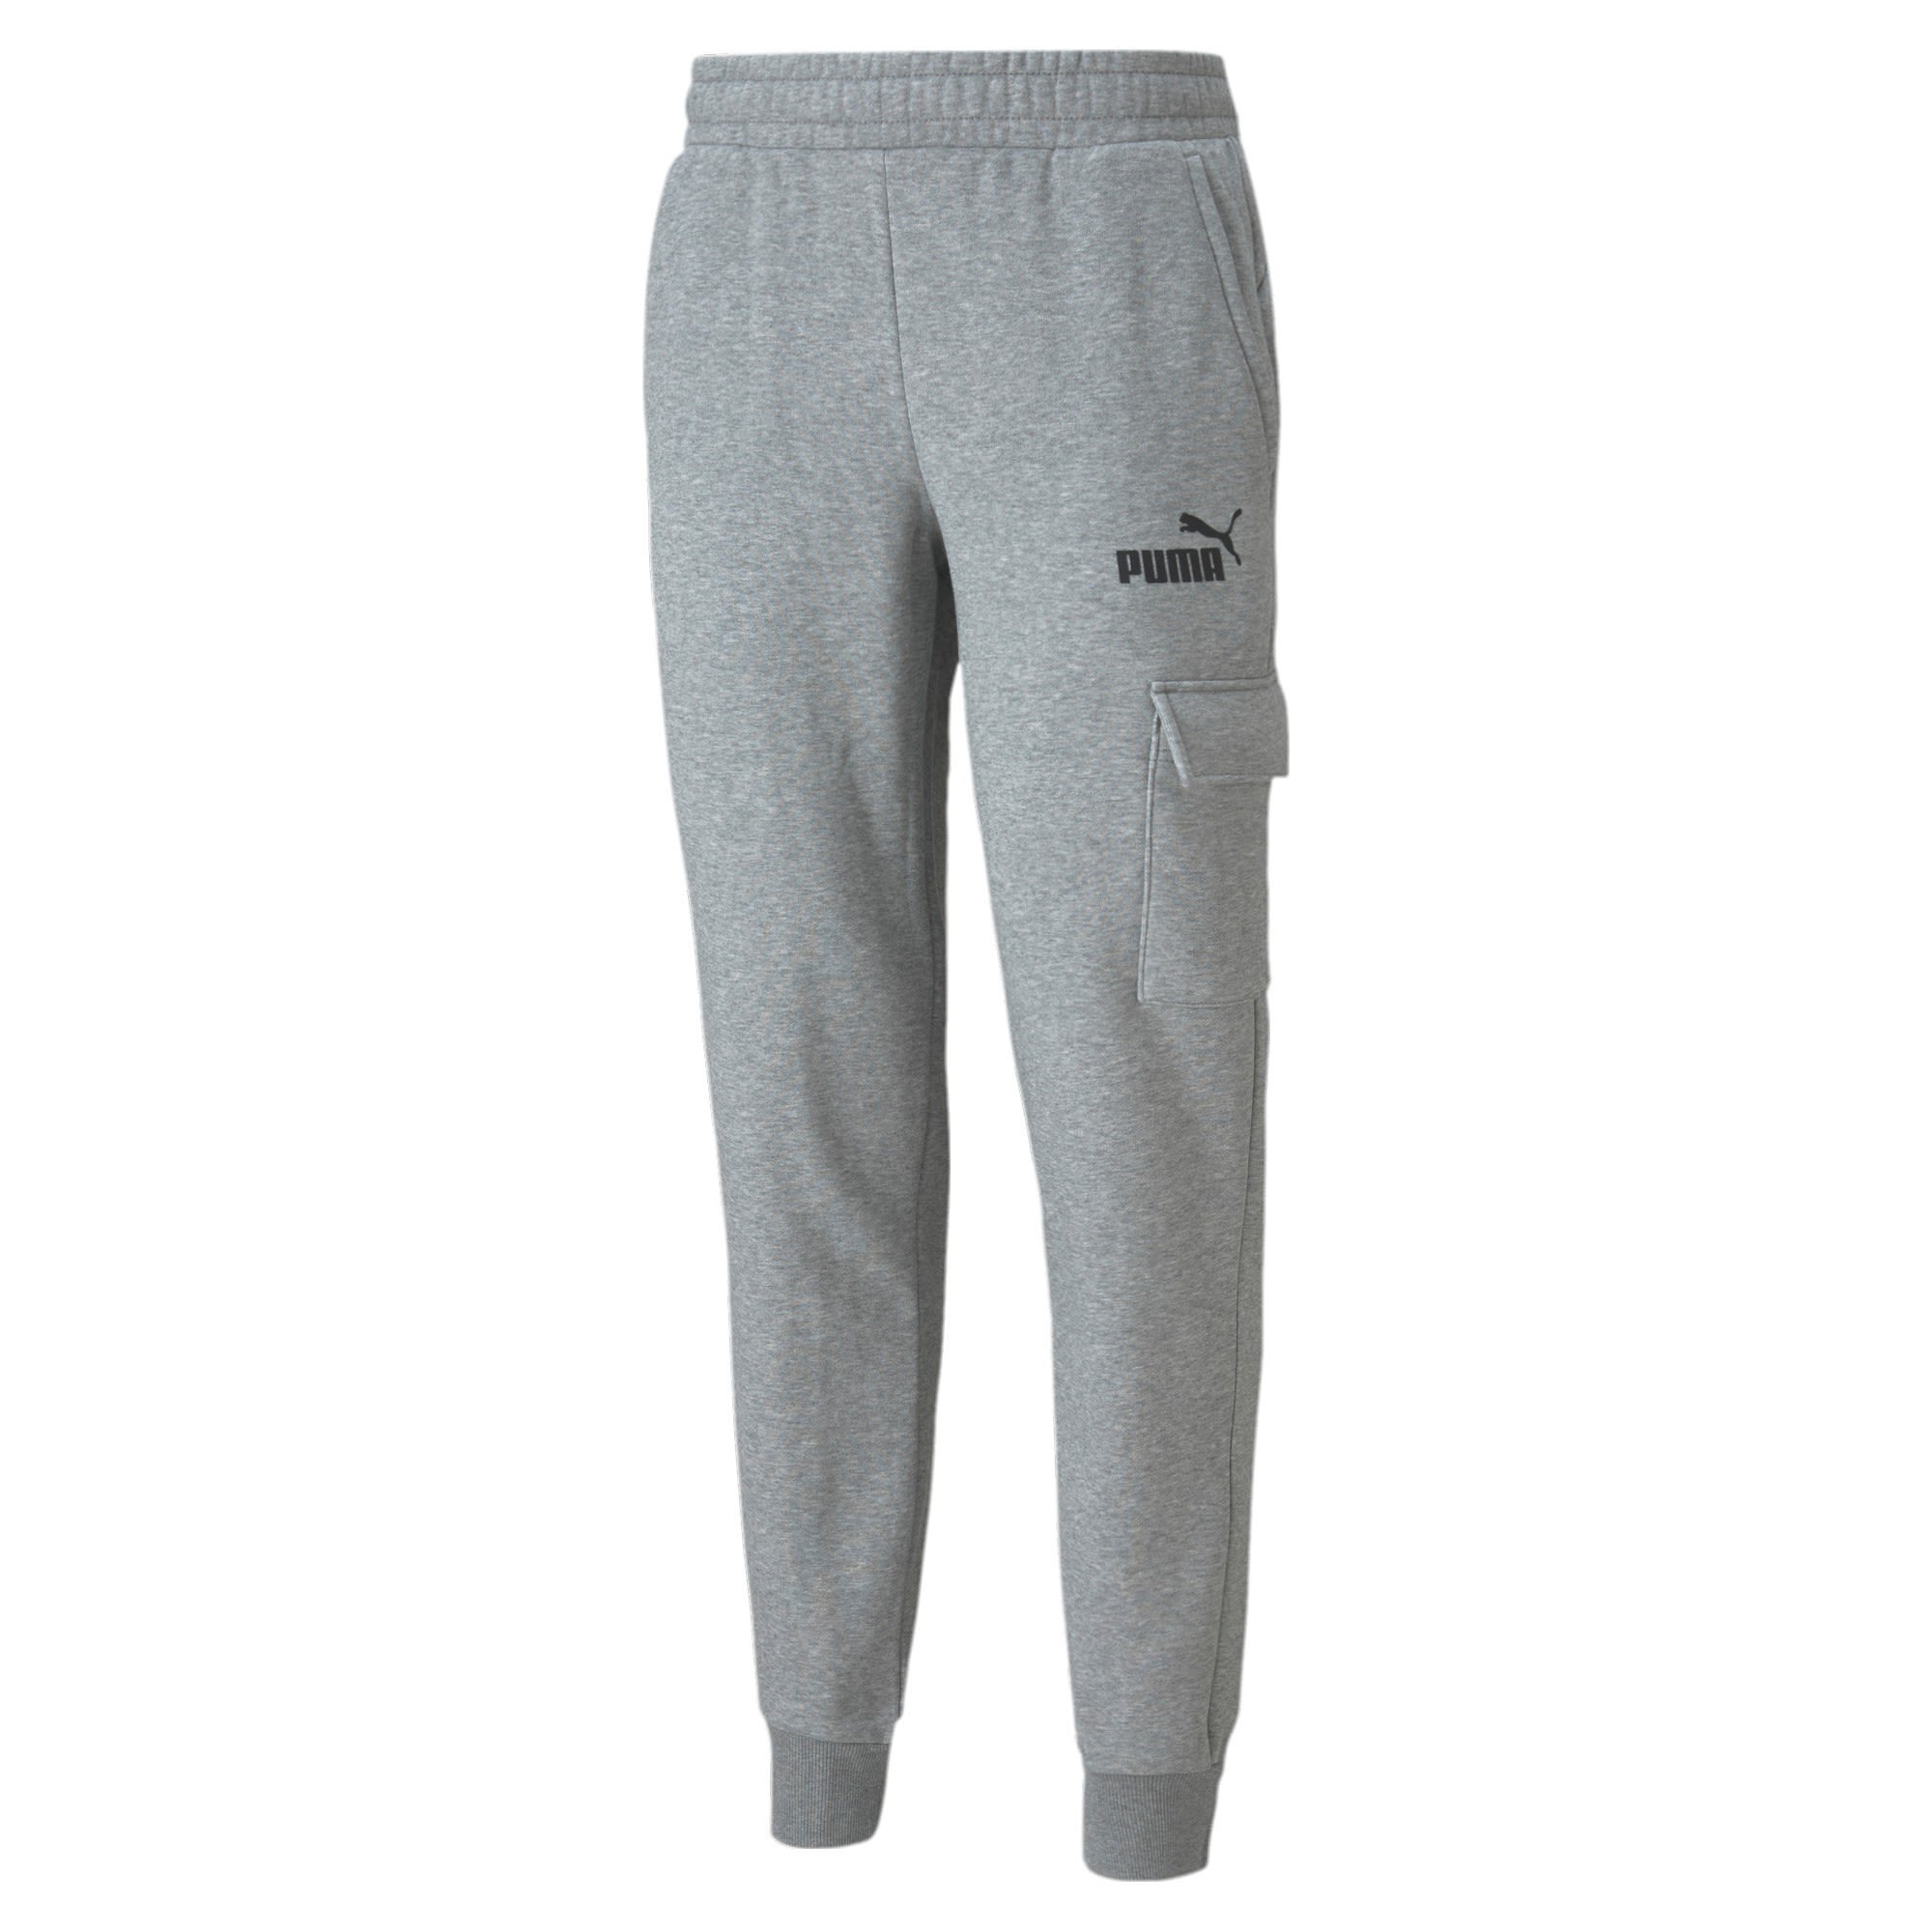 Puma Essentials Cargo Pants Grau- Male Lange Hosen- Grsse S - Farbe Medium Gray Heather